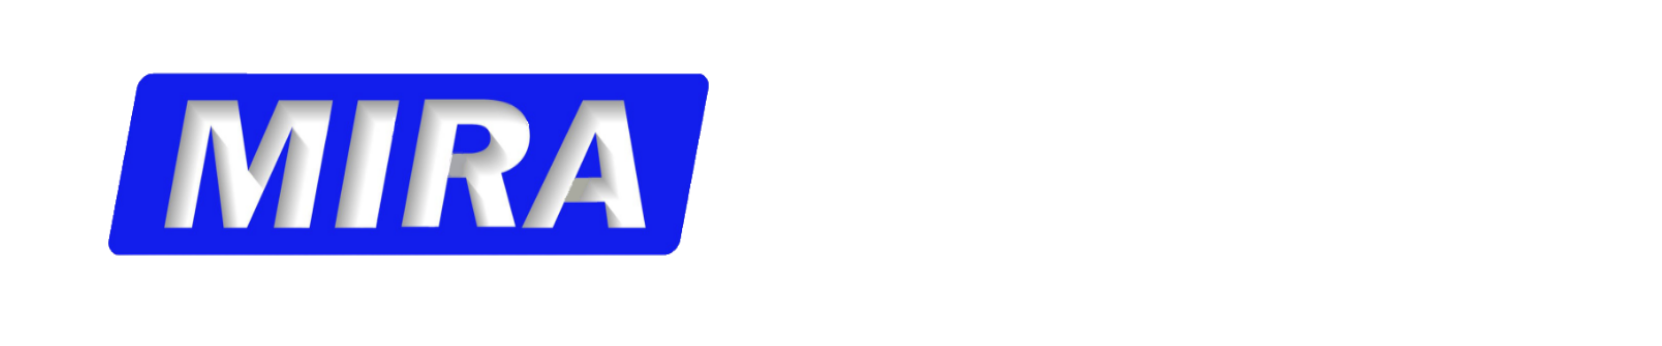 MIRA Engineering